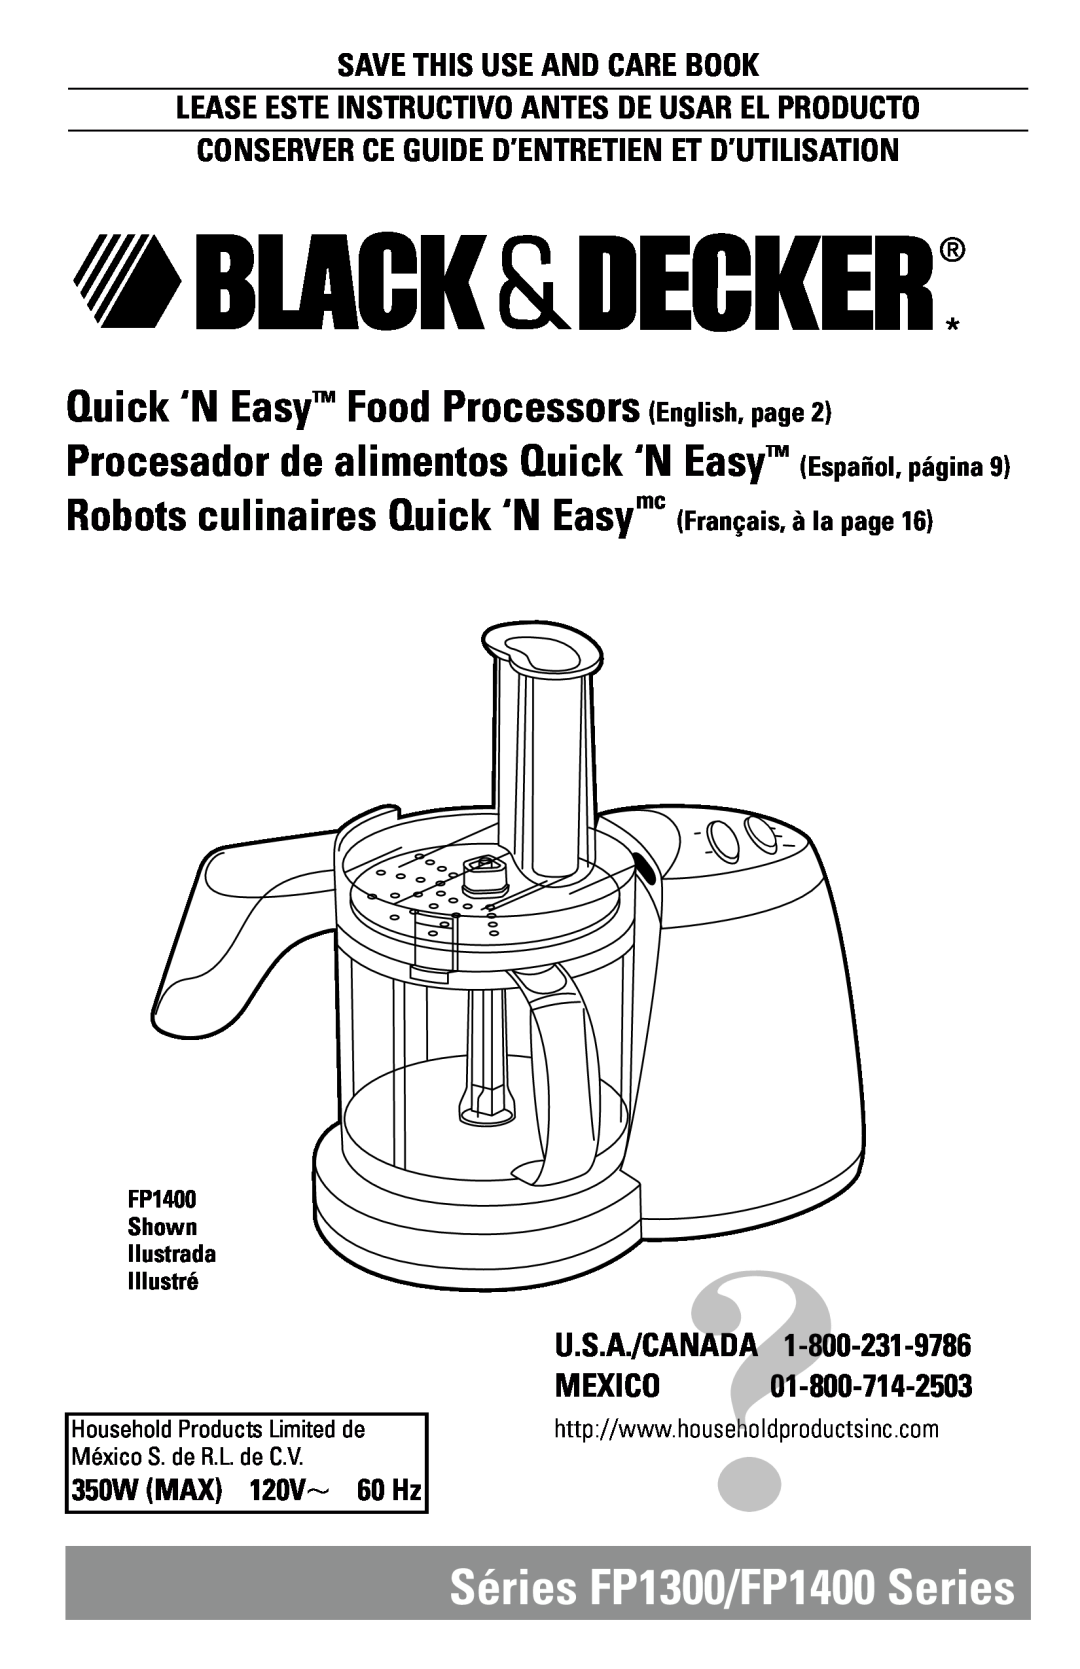 Black & Decker FP1300 Series manual Save This Use And Care Book, Lease Este Instructivo Antes De Usar El Producto, Mexico 